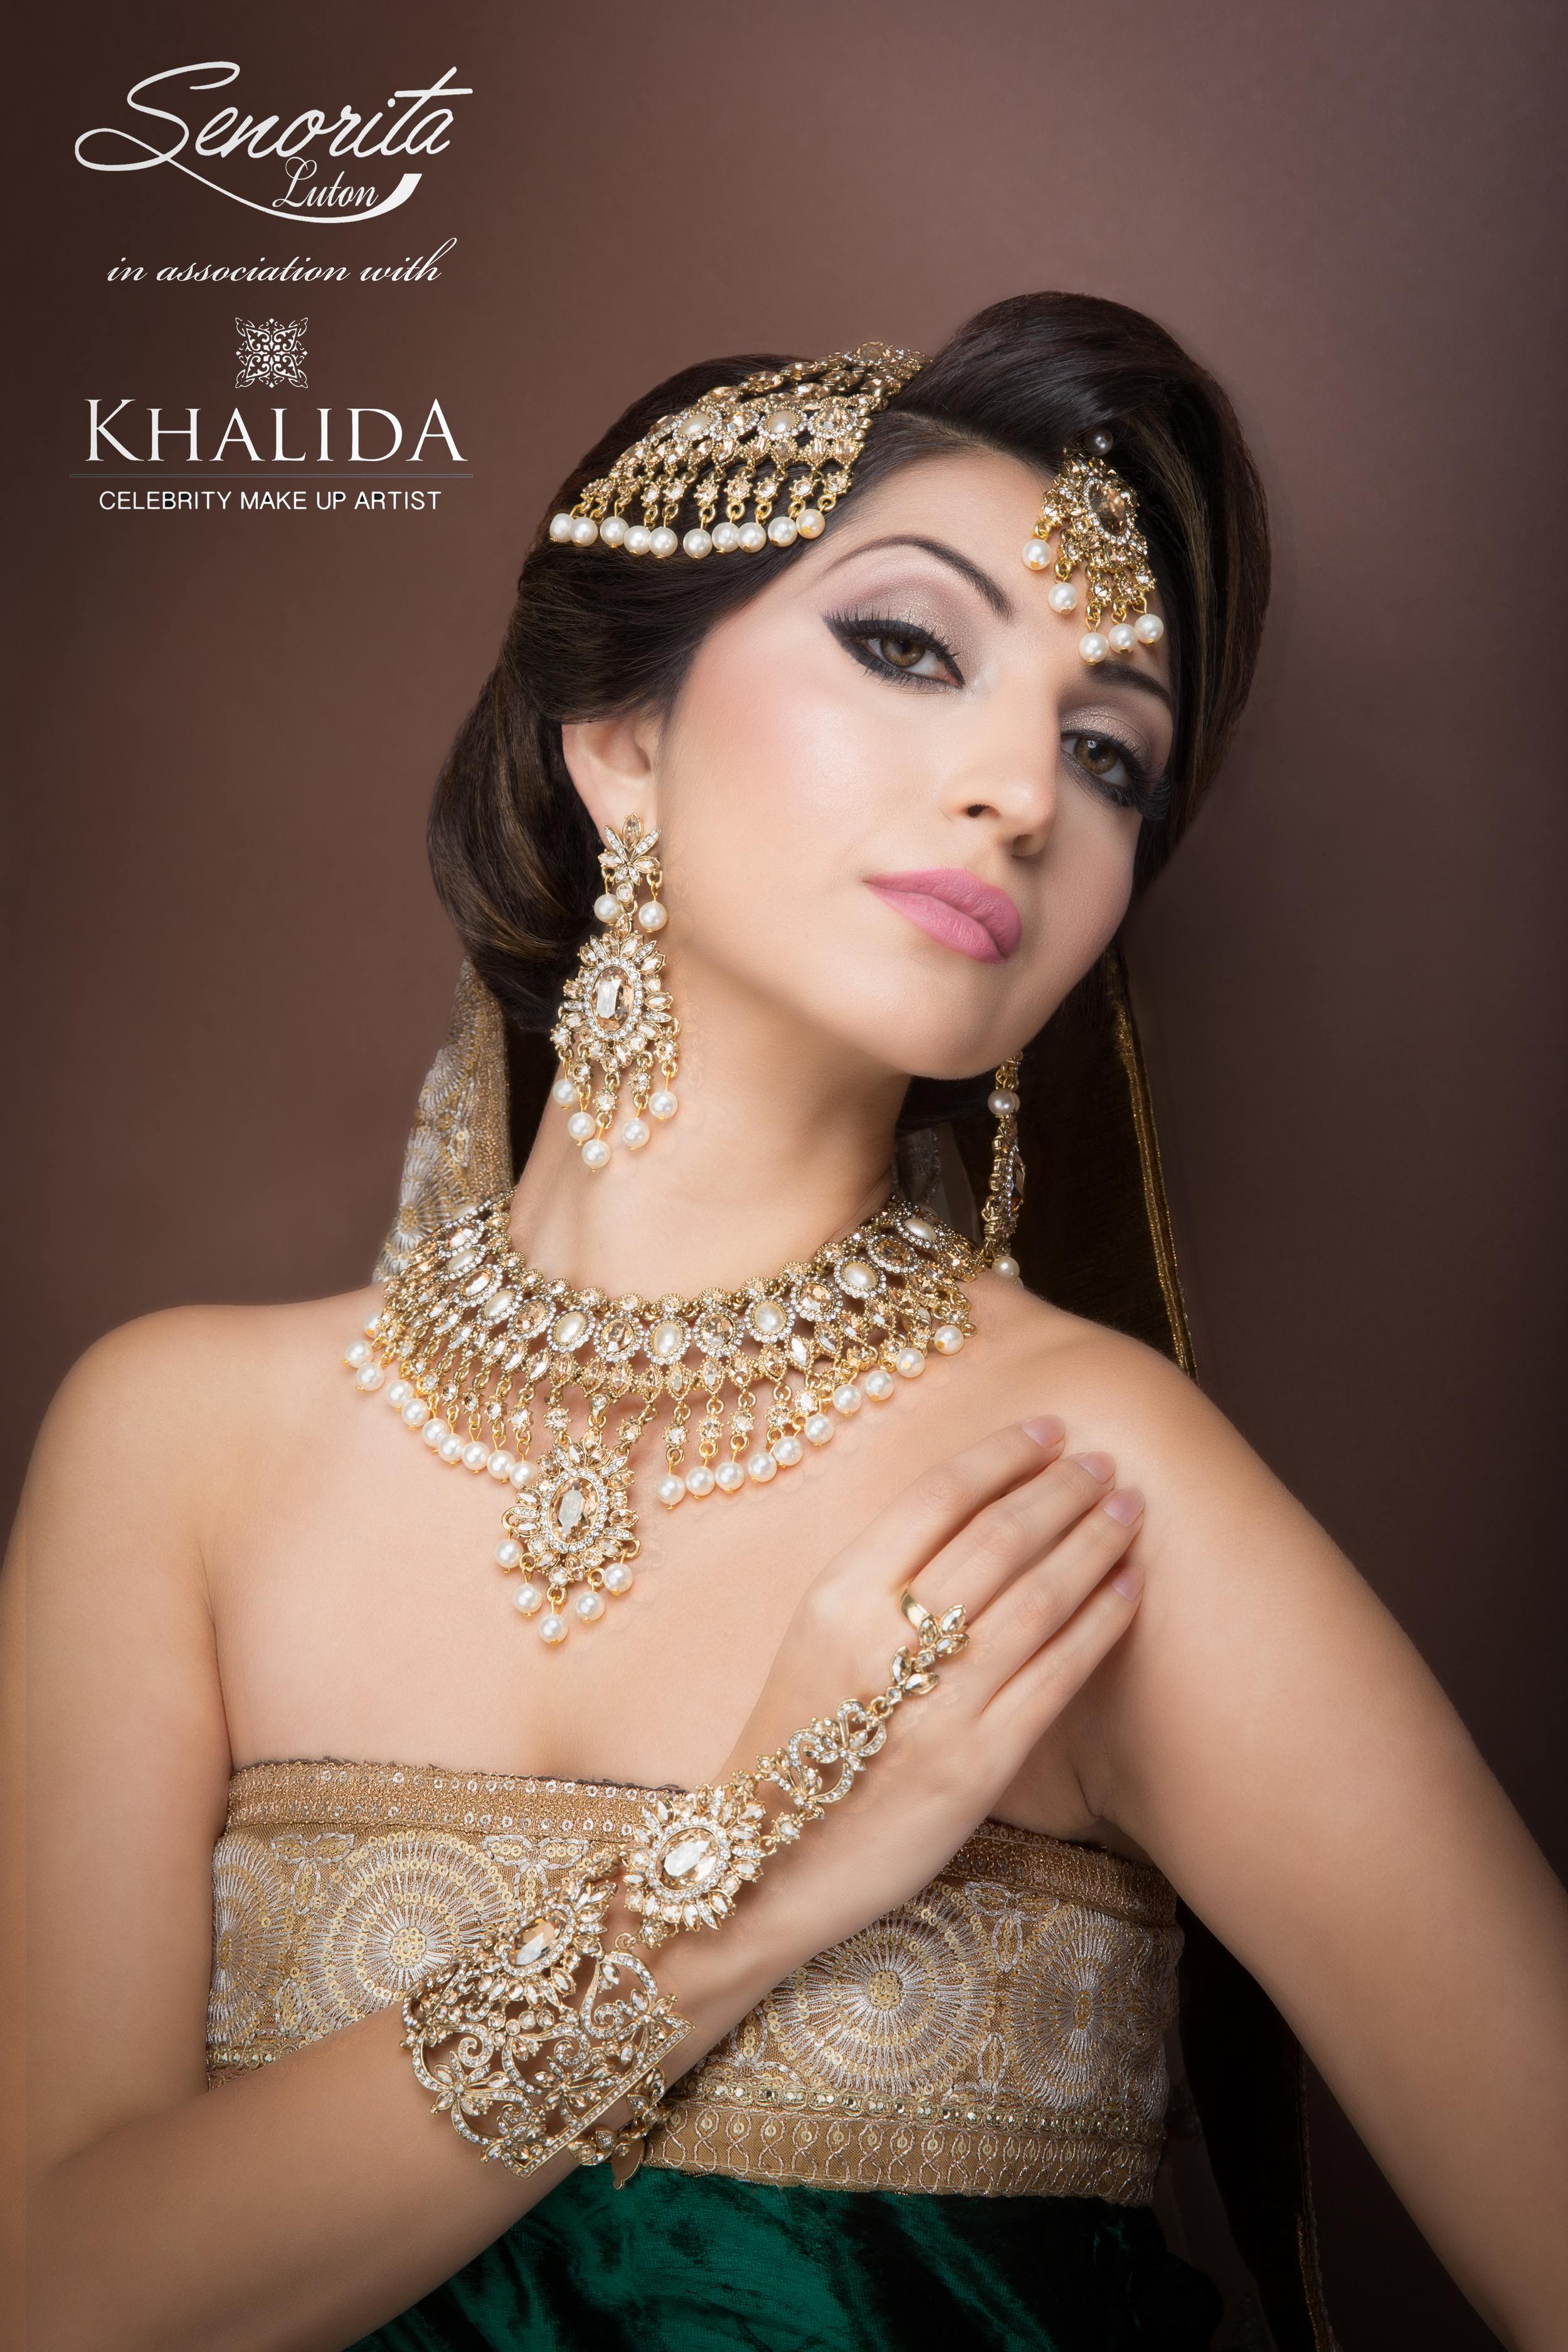  Model: &nbsp;Priyanka  Makeup: Khalida Makeup Artist  Client: Seno Rita (Senorita)  Stylist: Haroon 